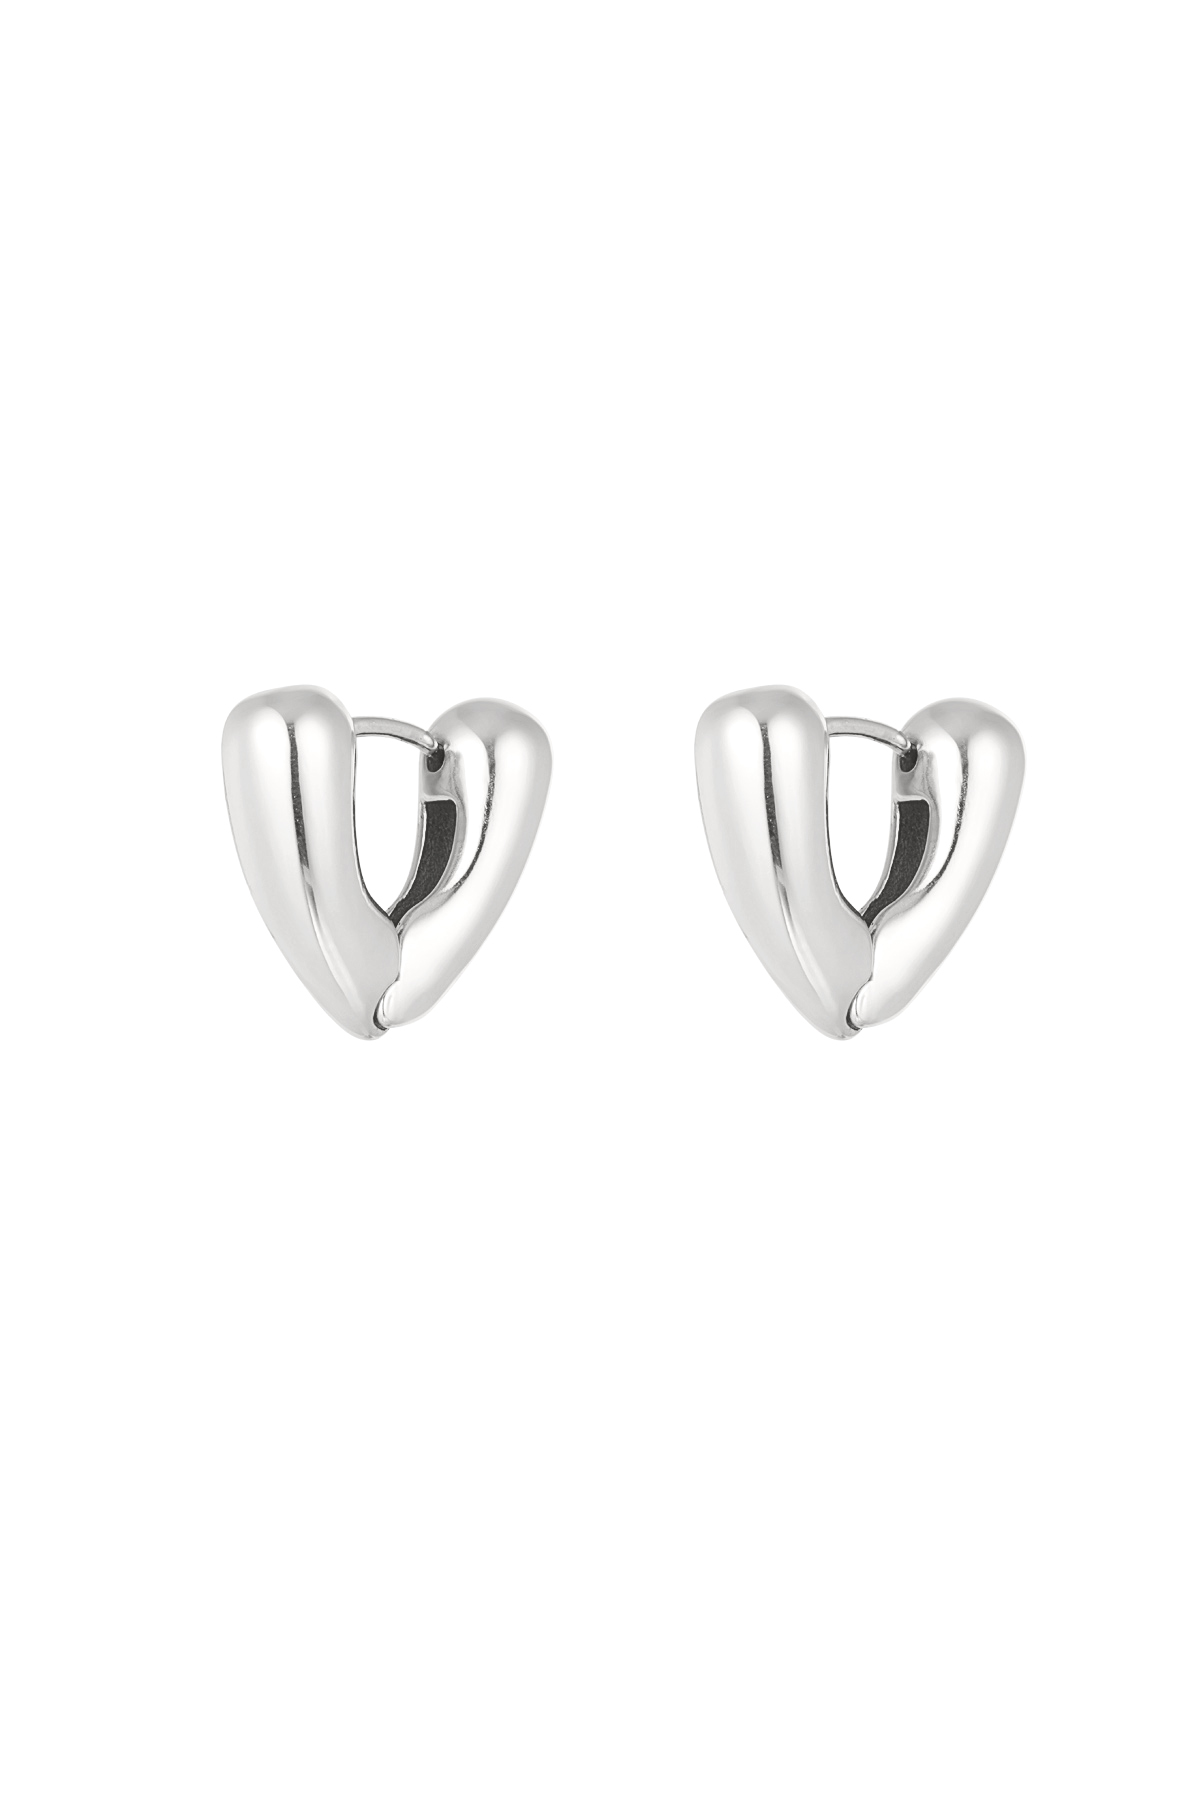 V-förmige Ohrringe klein – Silber